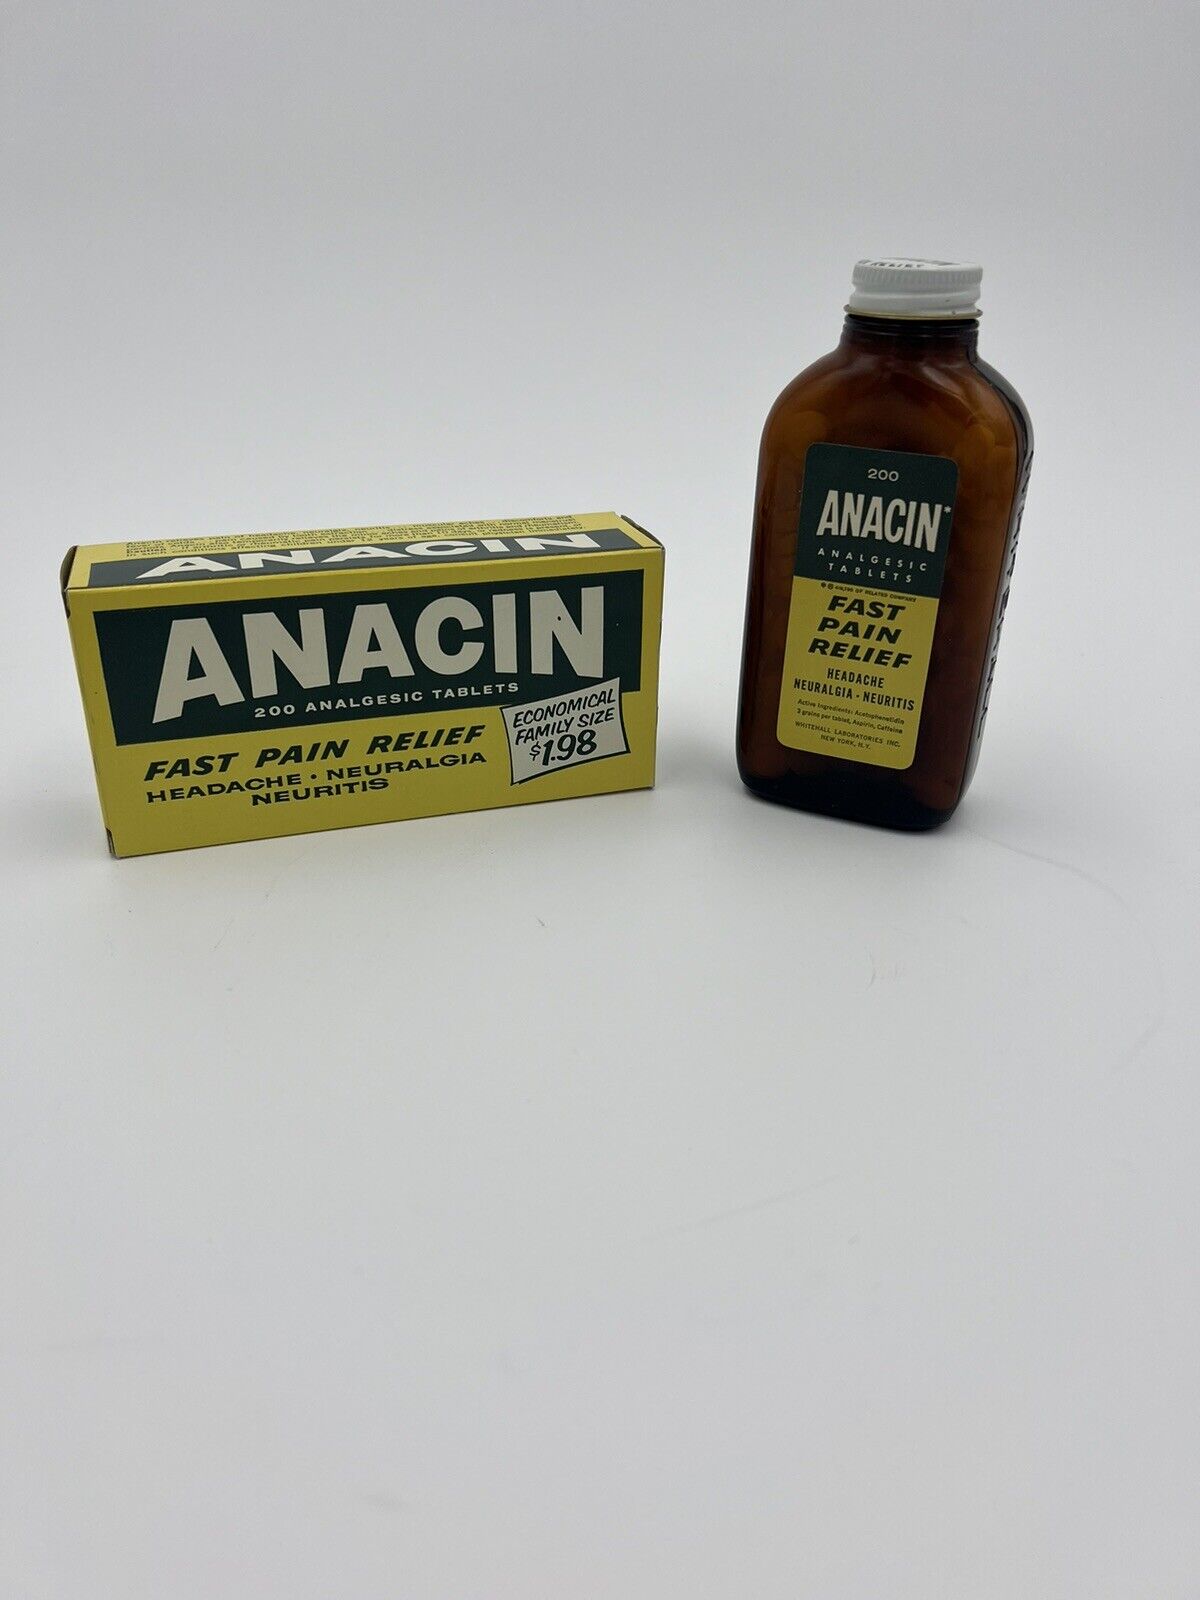 Vintage 1960s  Anacin Analgesic Tablets (200)  Box & Bottle For Decoration